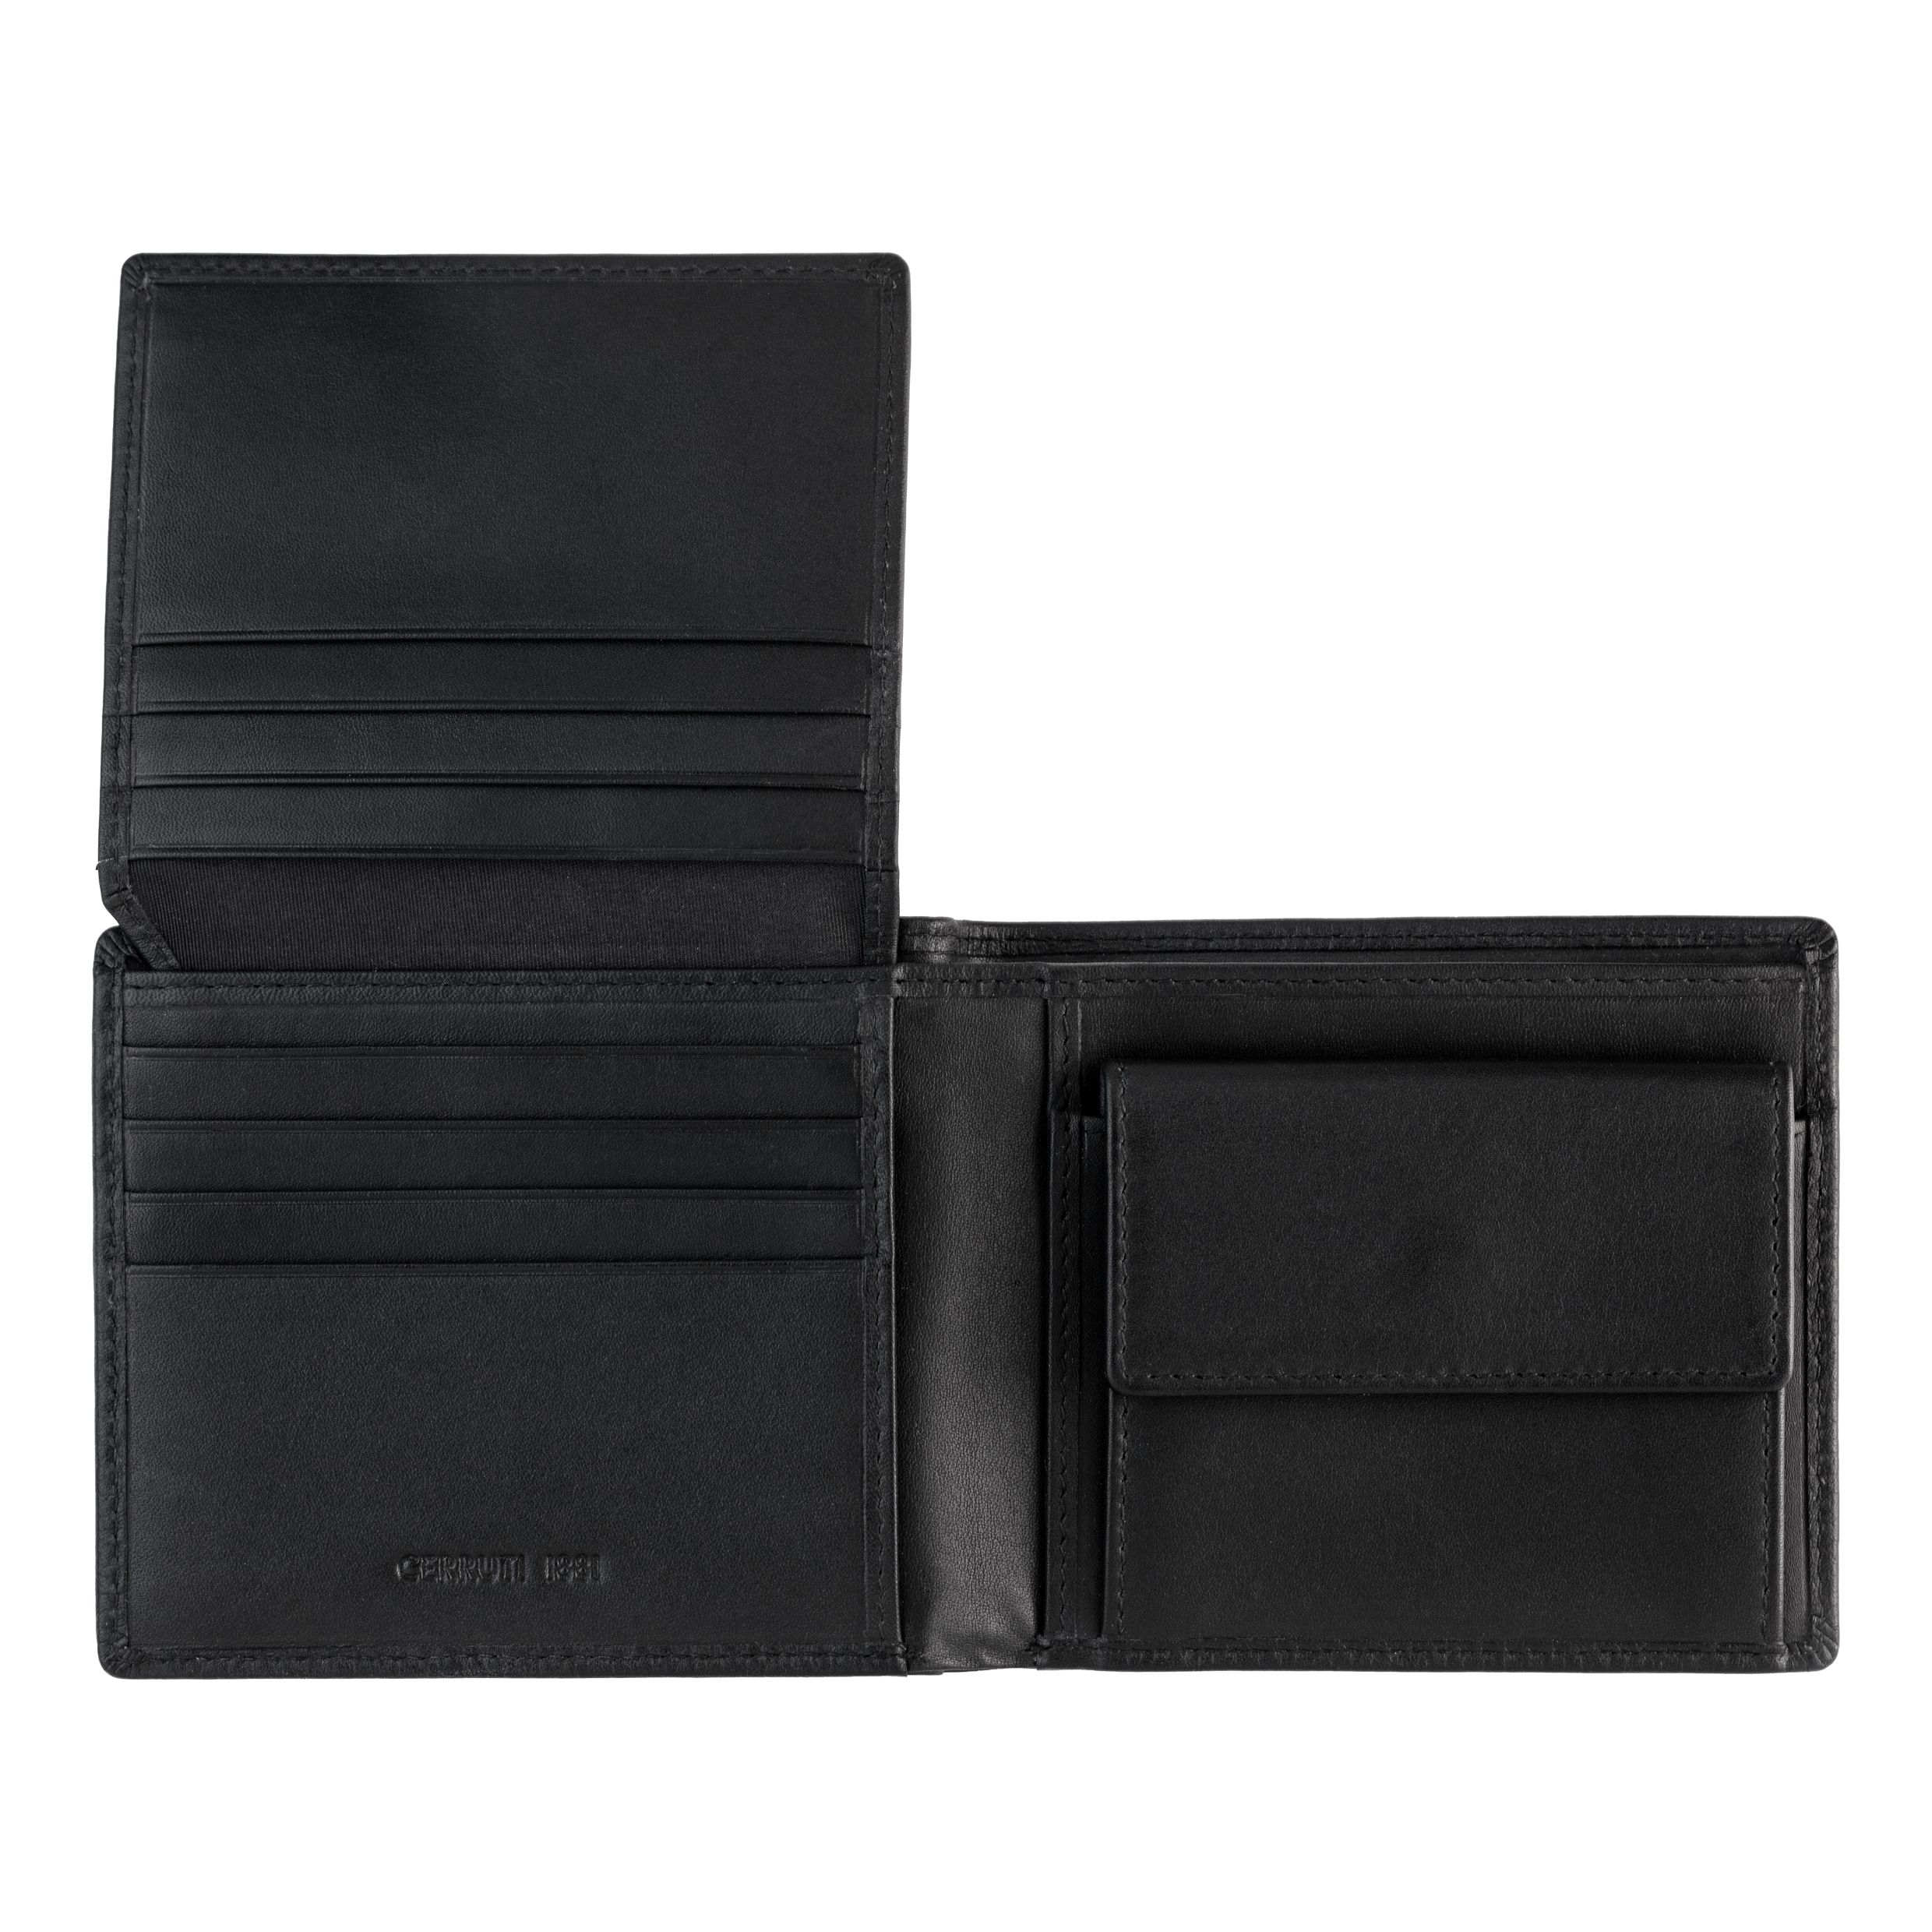 Cerruti lookbook wallet irving black